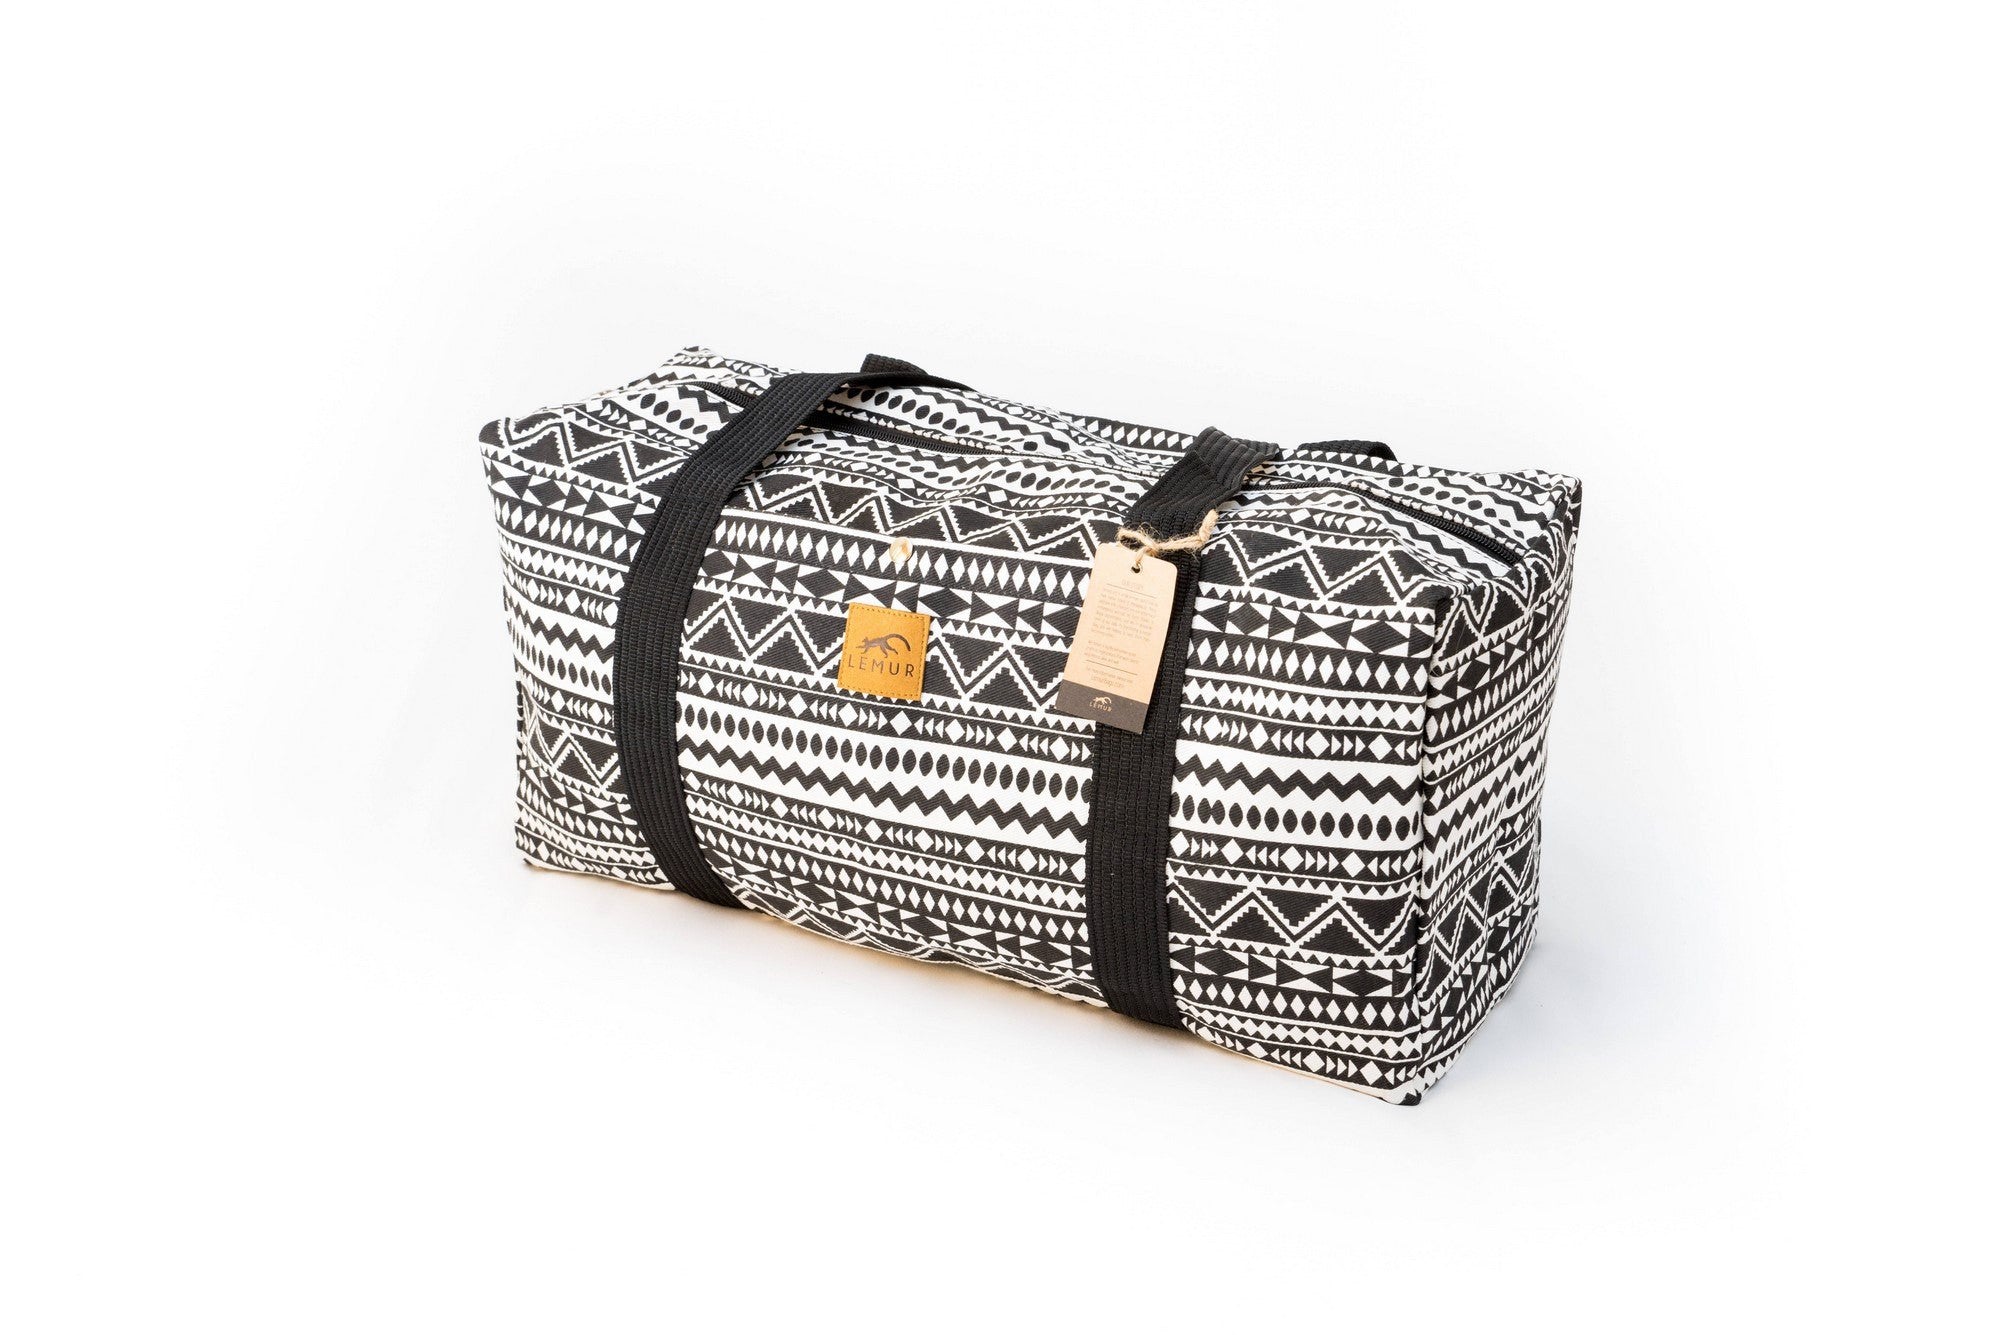 Canvas Duffel Bag - Canvas Duffel Bag - Gym Or Sports Bag, Carry-On Travel Luggage By Lemur Bags (Aztec Tribal)